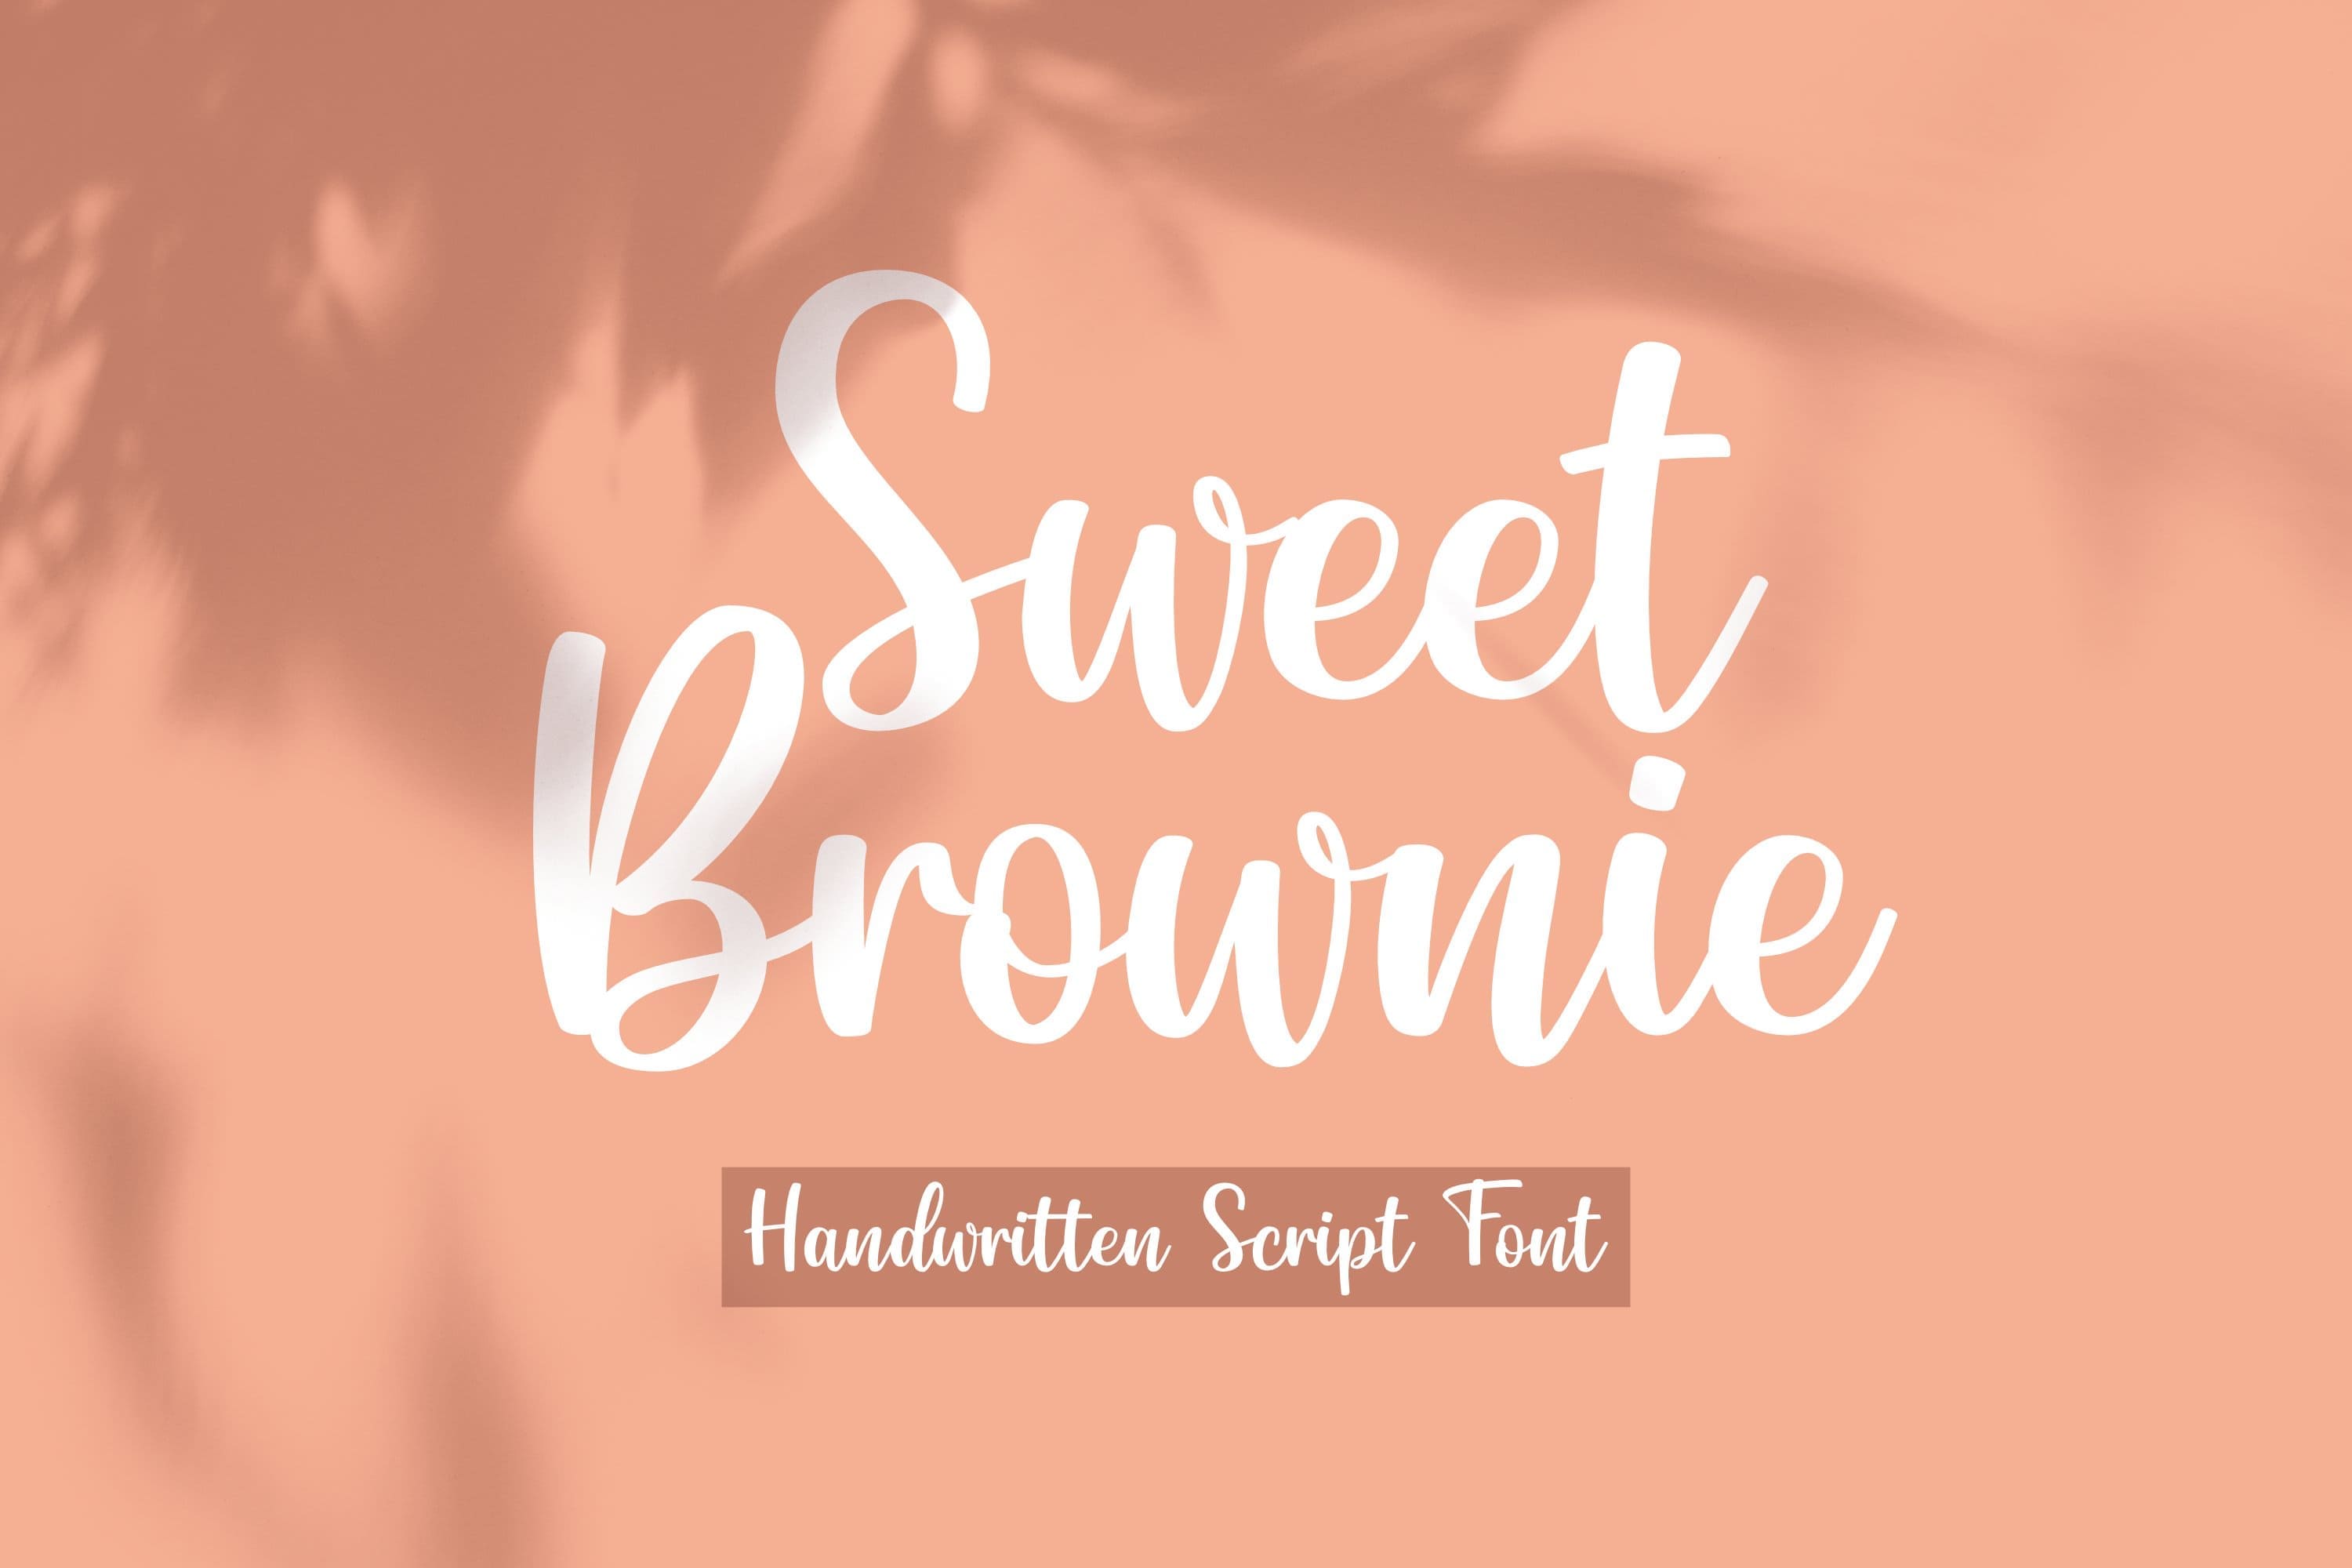 Sweet Brownie - handwritten Script Font, main picture.